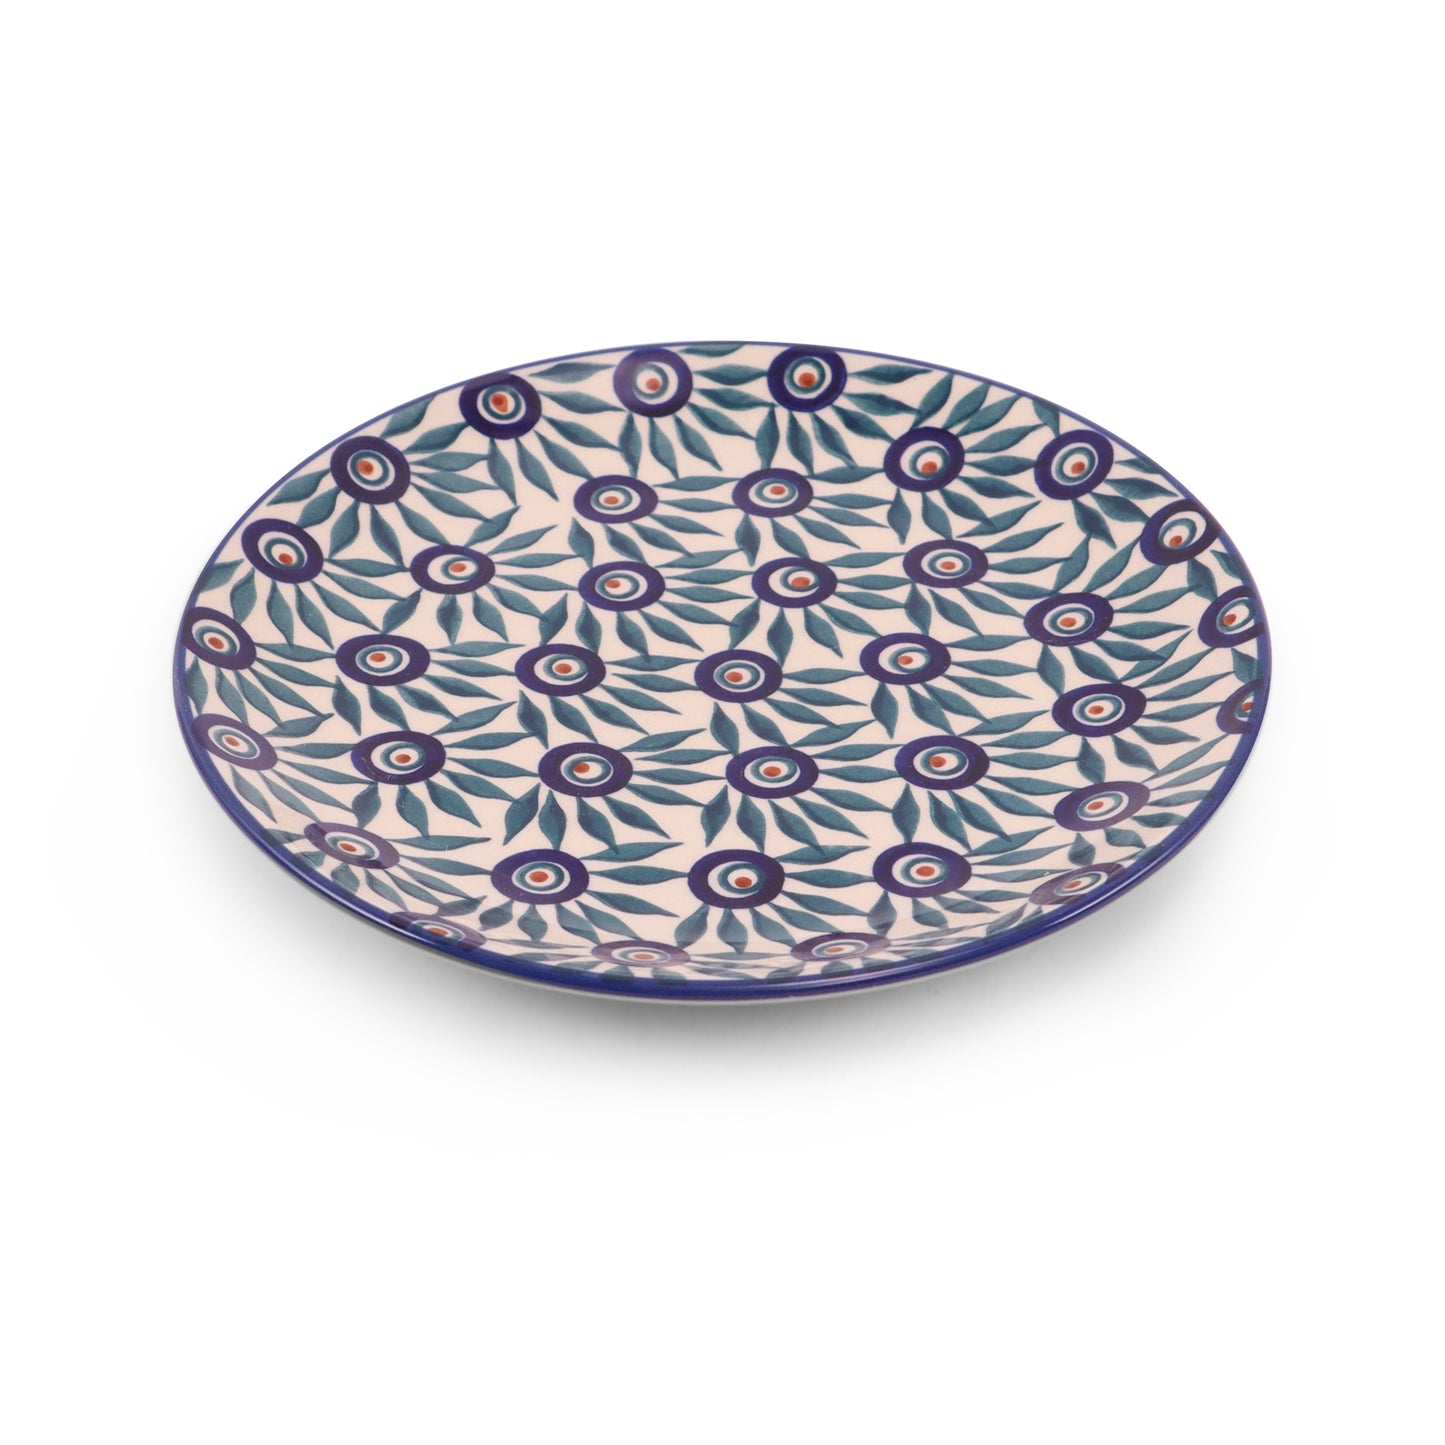 8.5" Plate.  Pattern: Modern Peacock